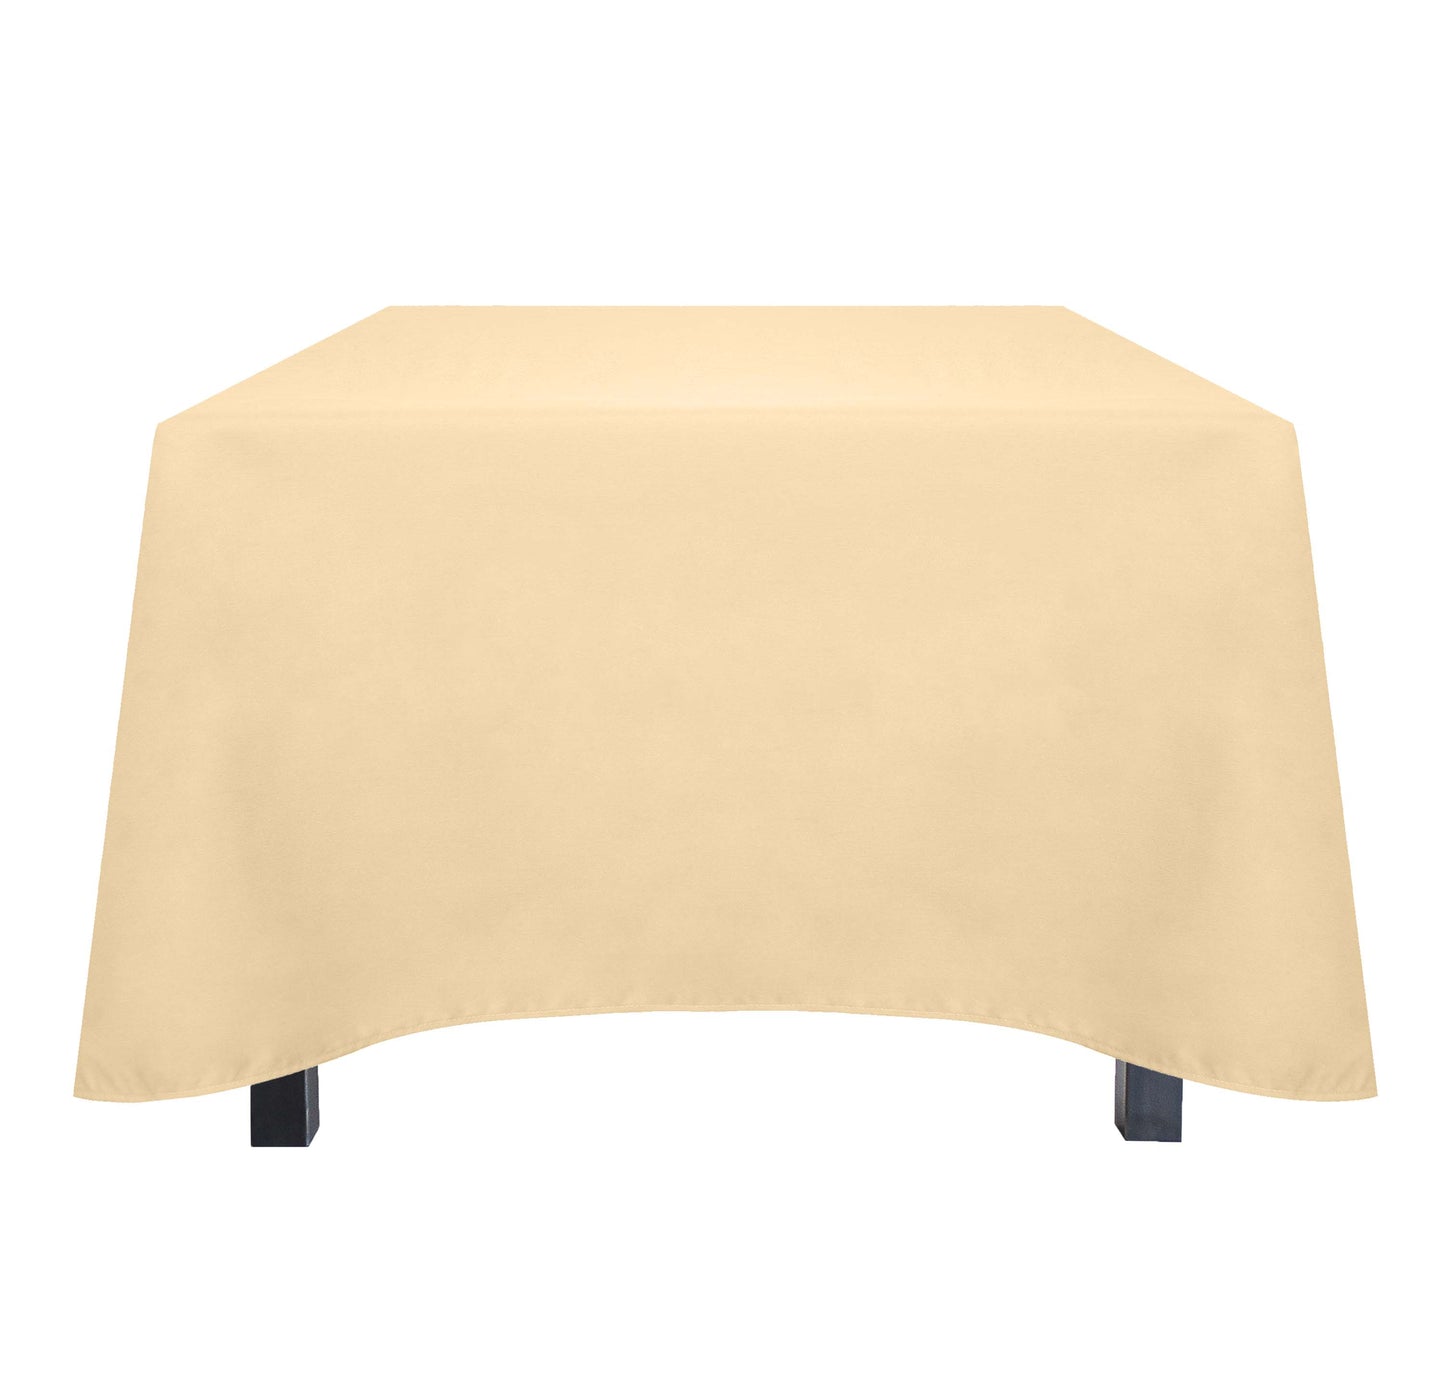 Tablecloth, Serenity, 64x64 inch, 36 pcs/pk